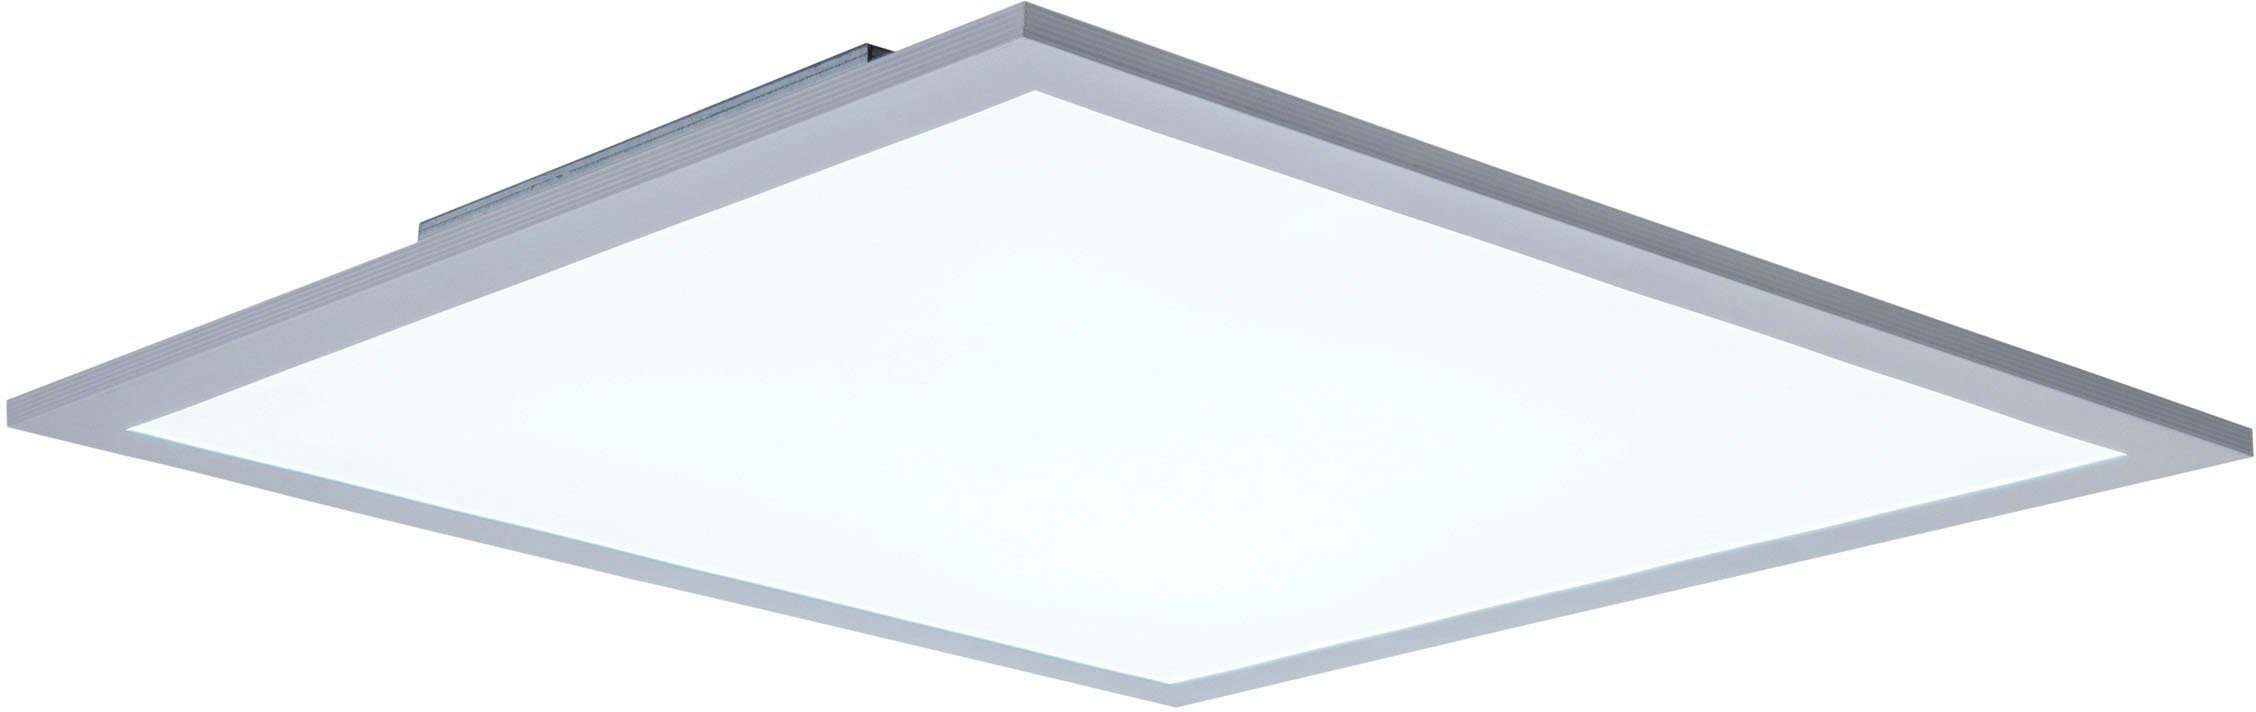 120 Nicola, 6cm, LED fest Aufbaupanel integriert, näve LED neutralweiß 45x45cm, Panel LED, Neutralweiß, Lichtfarbe weiß H: